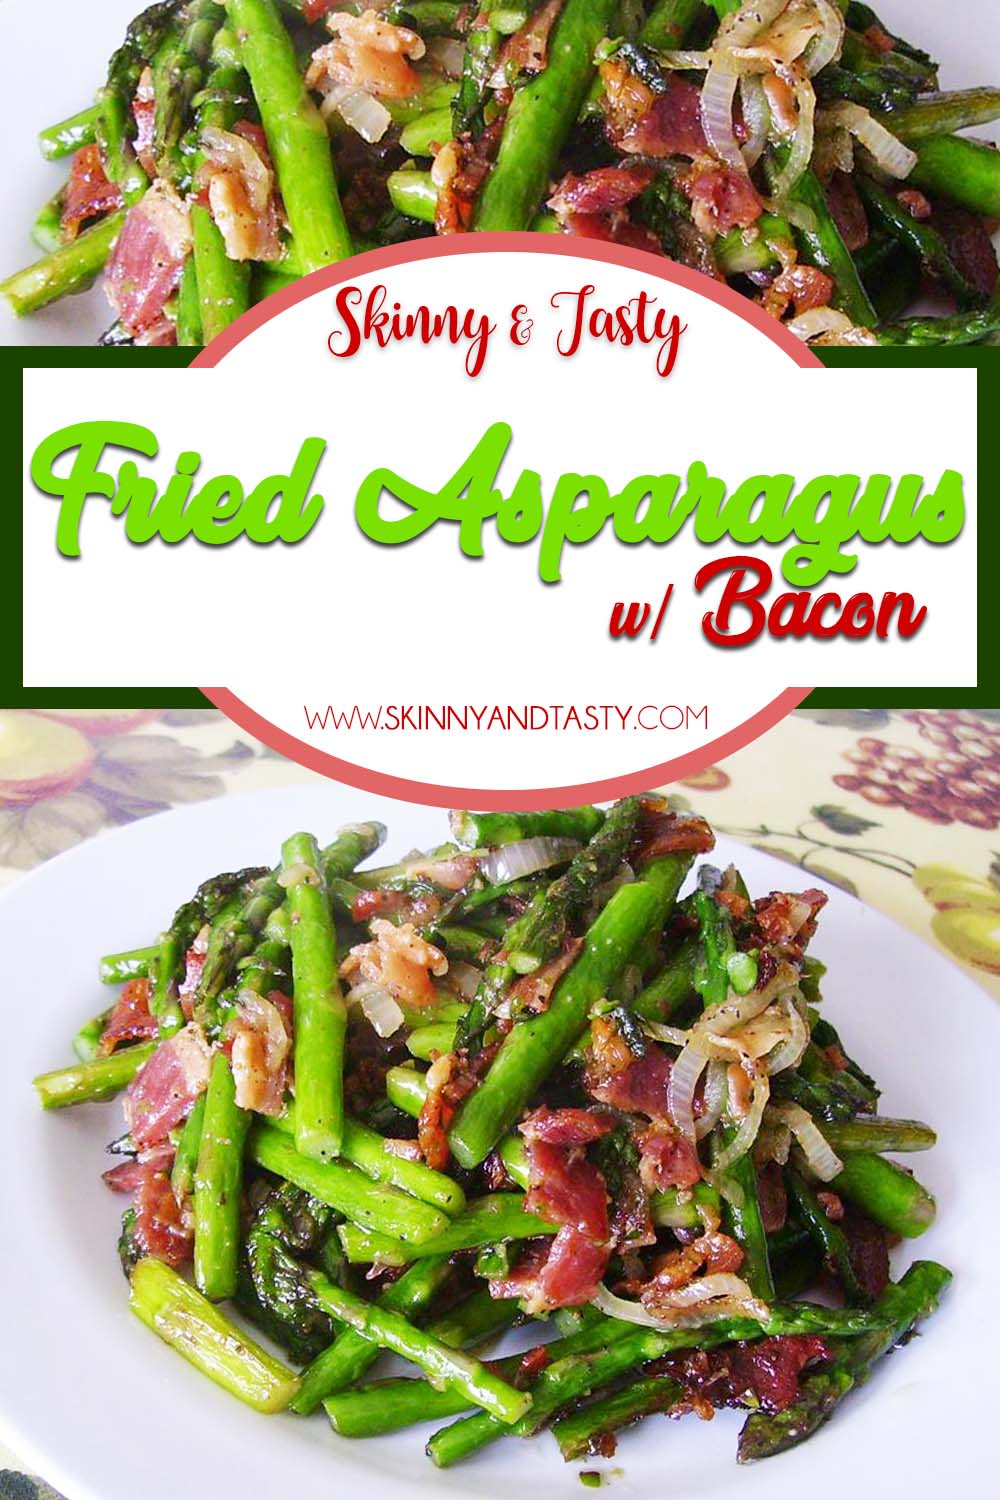 Fried Asparagus with Bacon